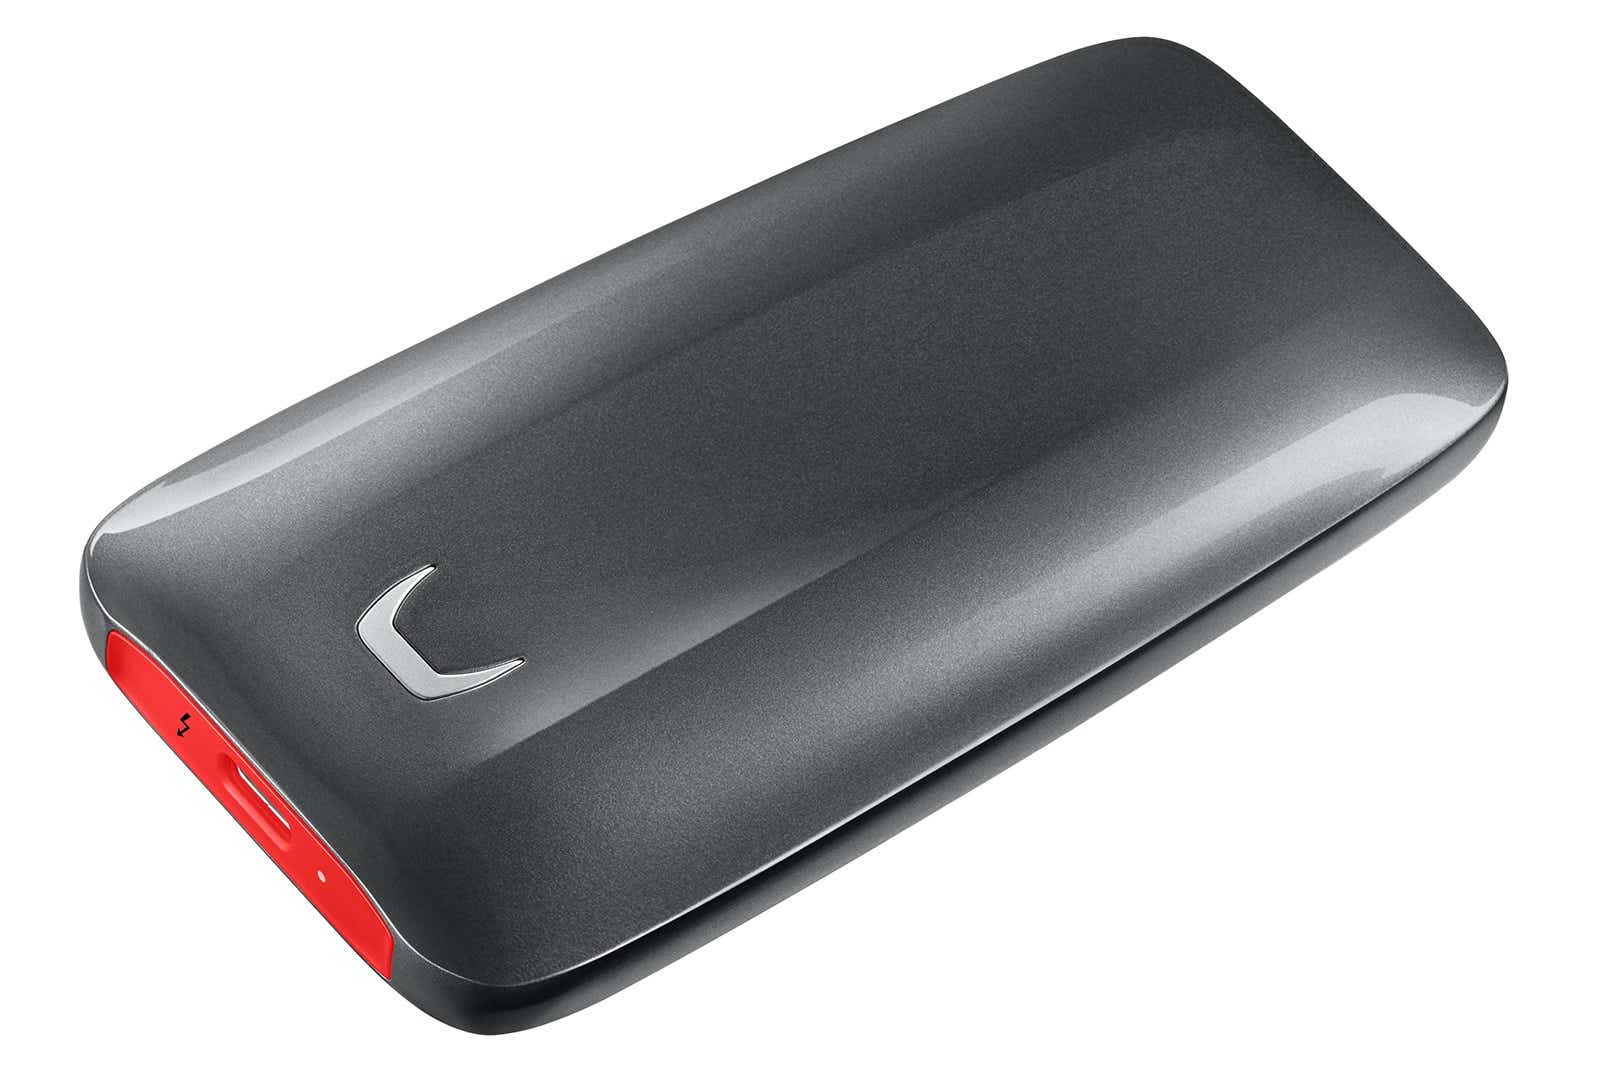 Daily News | Online News Portable SSD X5 - Best Thunderbolt 3 drive